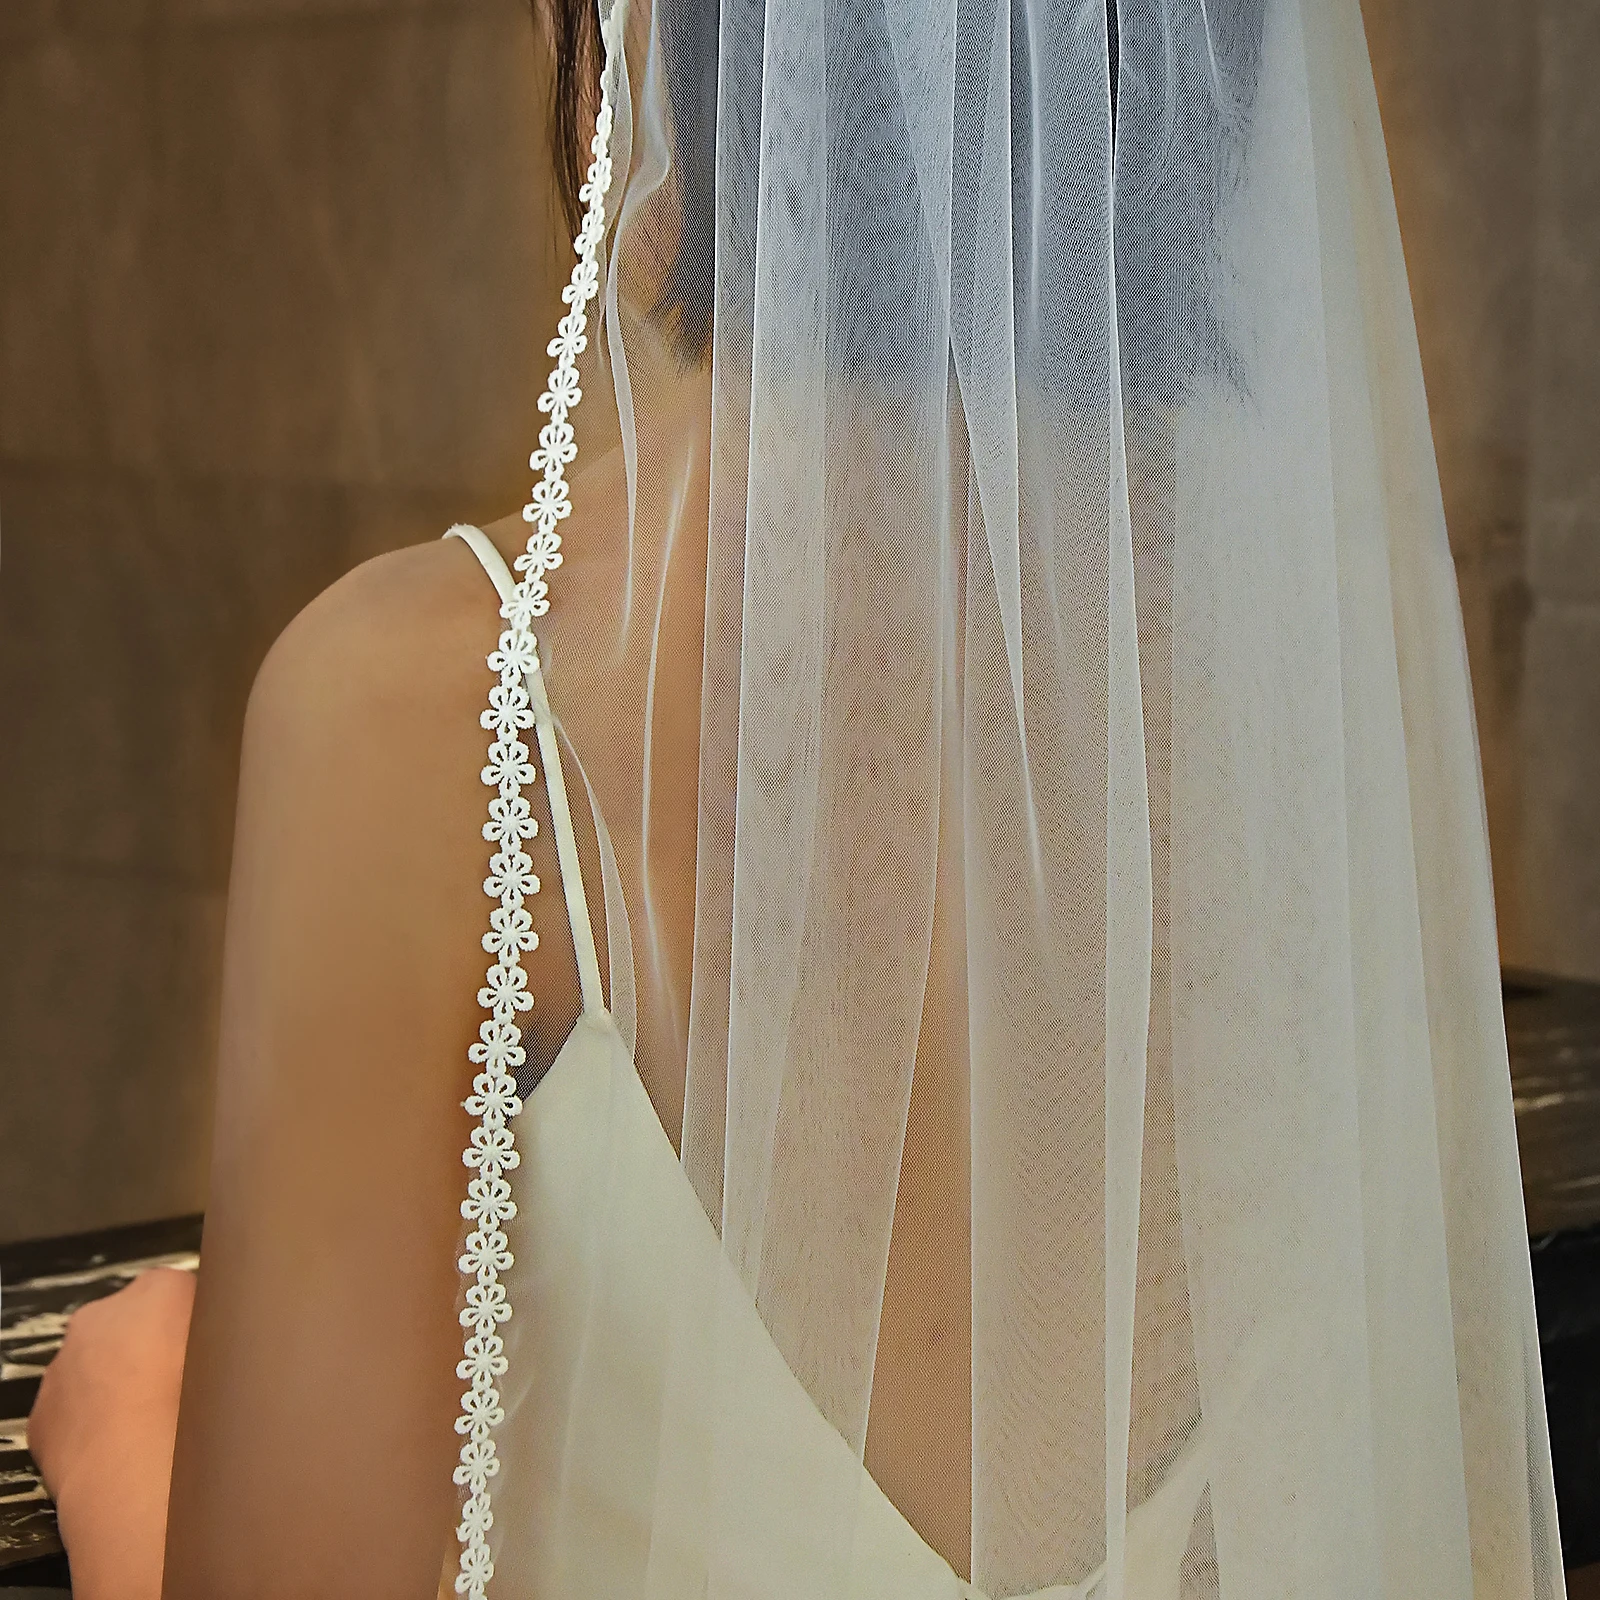 

MZA05 Wedding Bride Veils Flowers Applique Lace Around the Edge Wedding Veil Partial Trim 1 Tier Waltz Veil Bridal Accessories